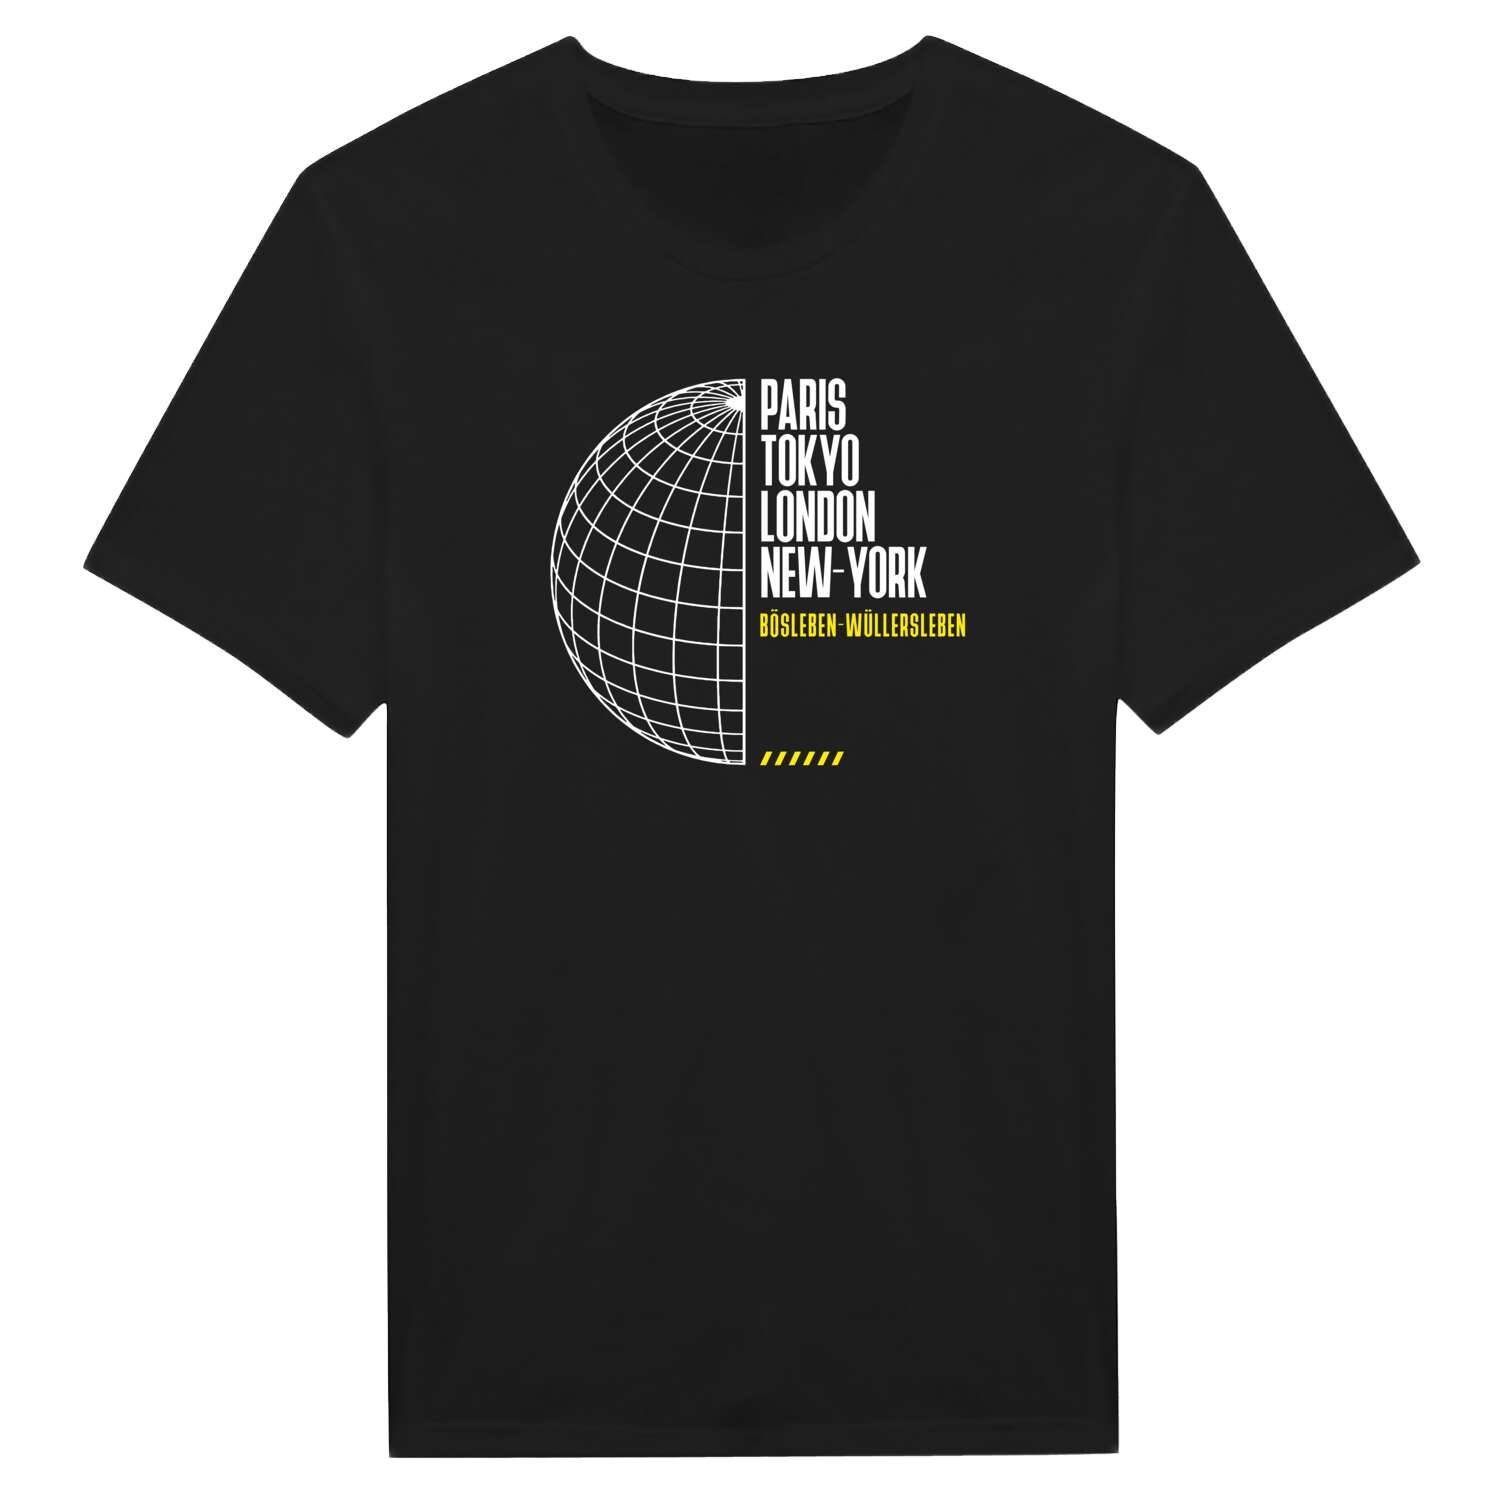 Bösleben-Wüllersleben T-Shirt »Paris Tokyo London«